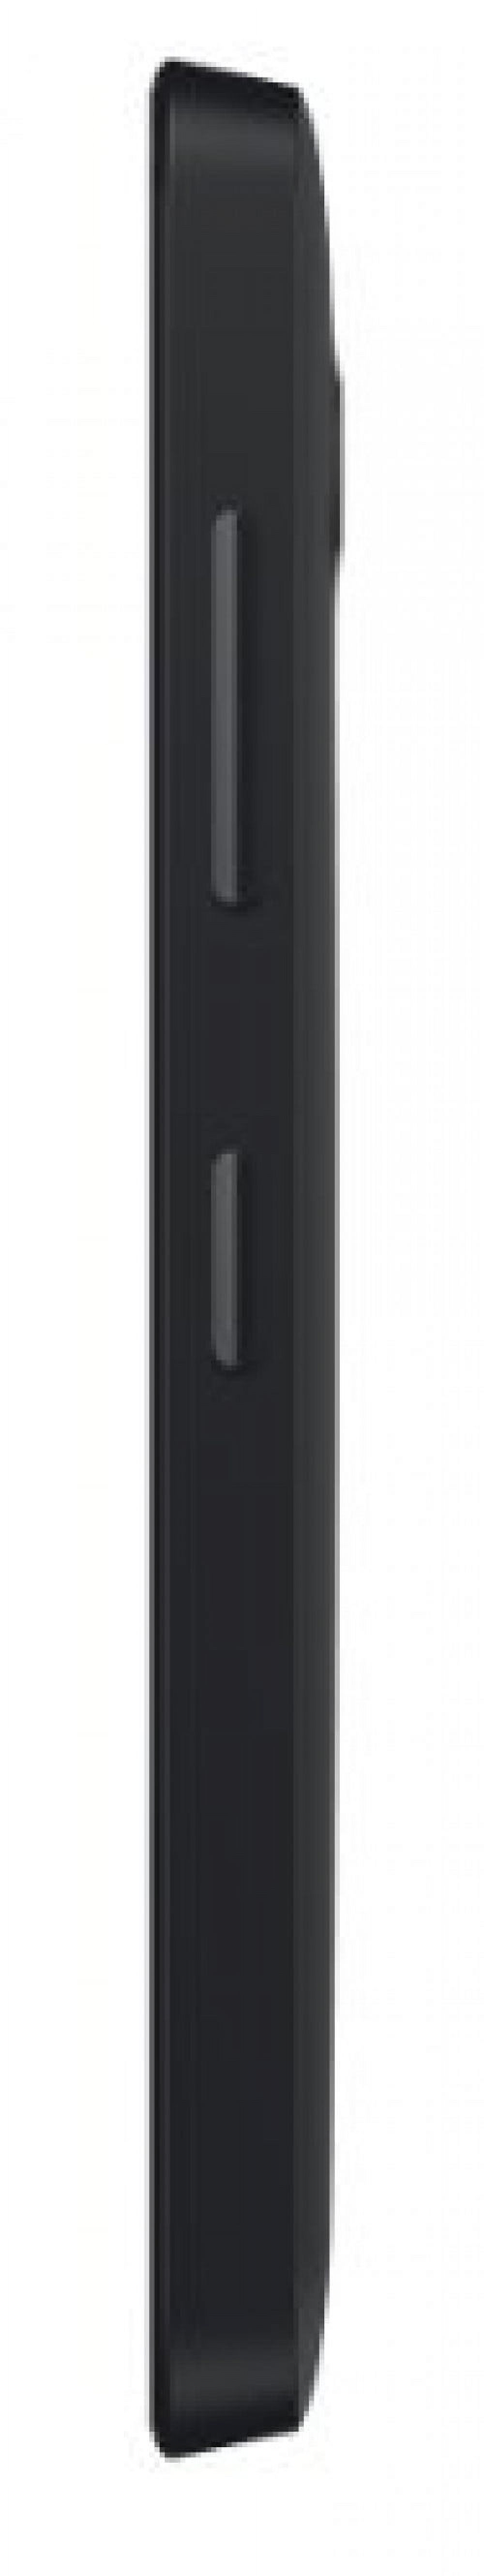 Nokia Lumia 635 8GB Unlocked GSM 4G LTE Windows 8.1 Quad-Core Phone - Black - image 2 of 2